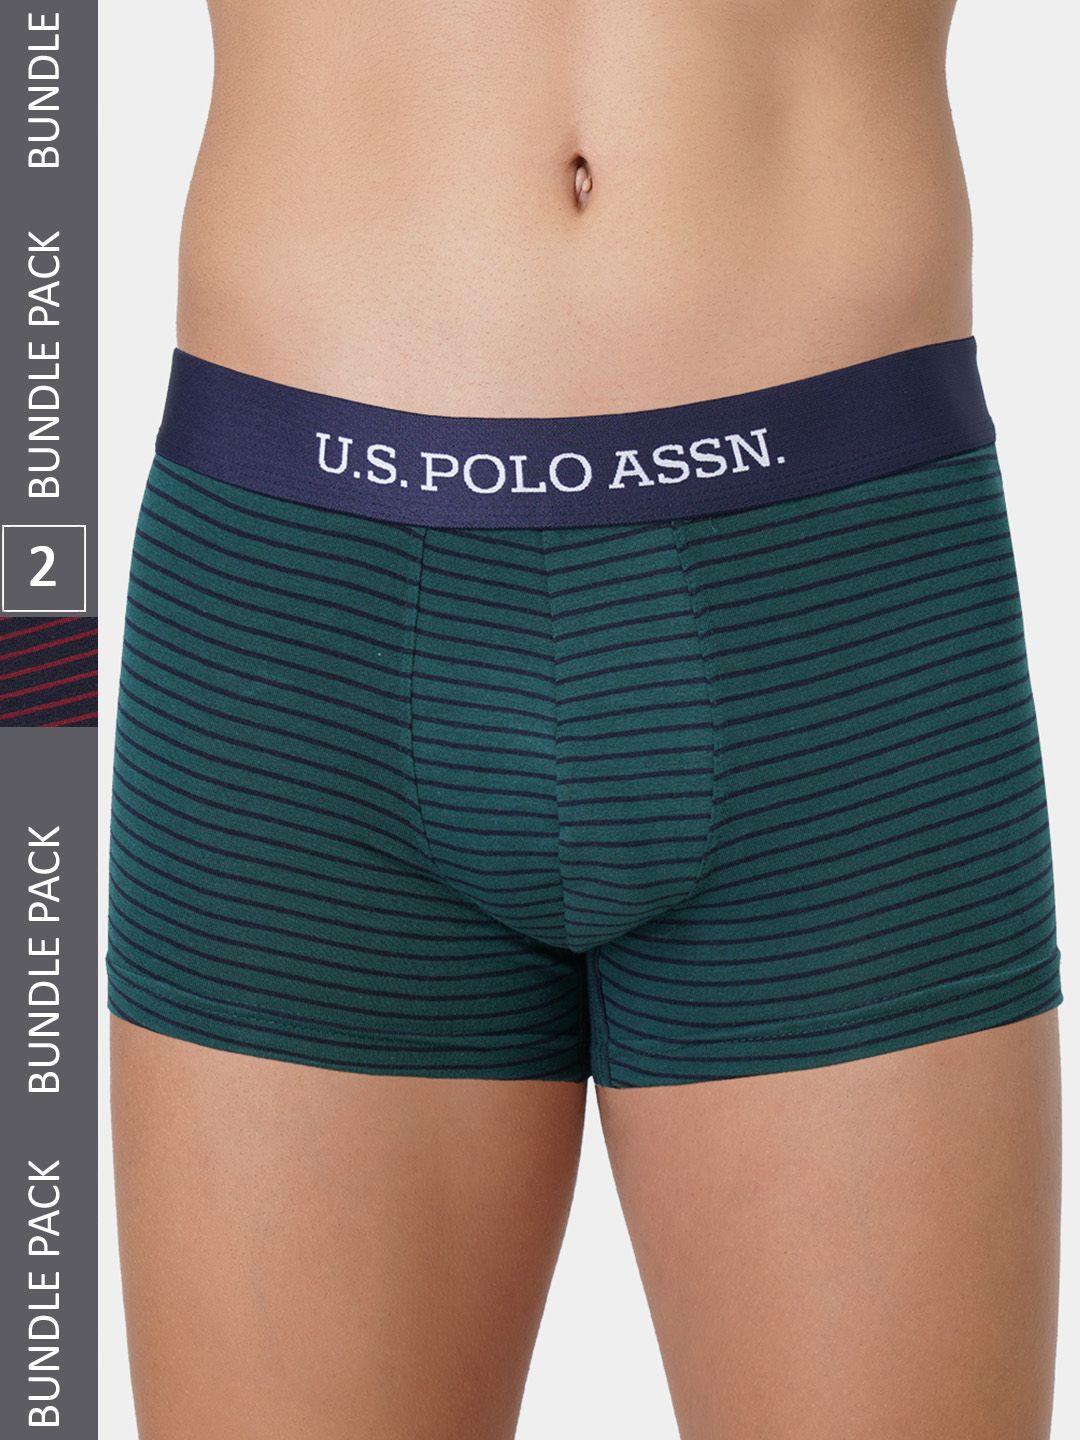 u.s.-polo-assn.-men-pack-of-2-striped-trunks-et005-dn1-p2